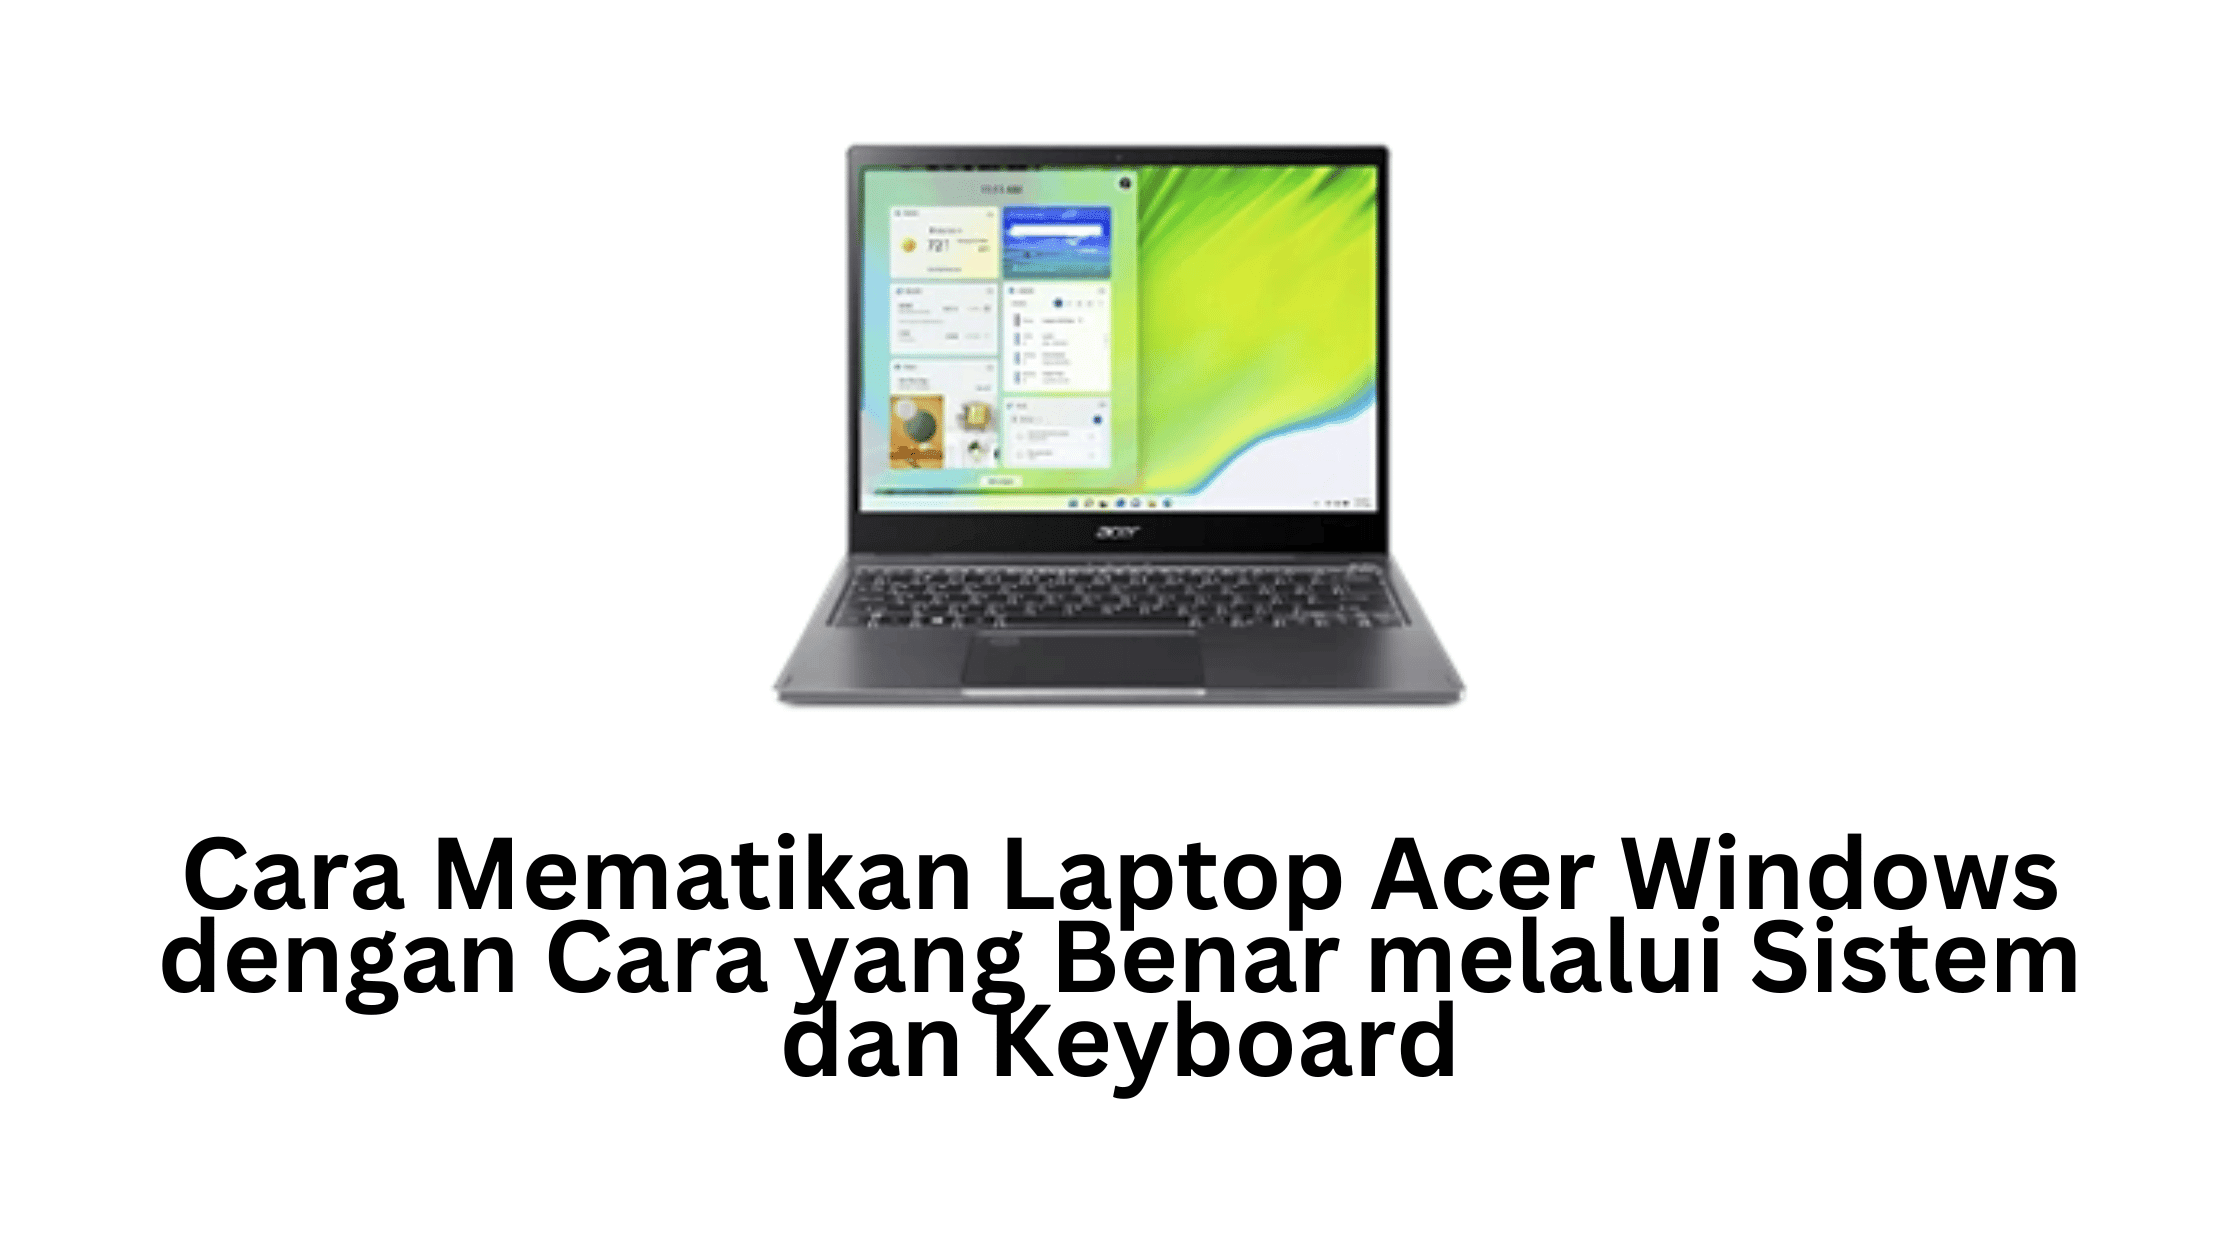 Cara Mematikan Laptop Acer Windows dengan Cara yang Benar melalui Sistem dan Keyboard